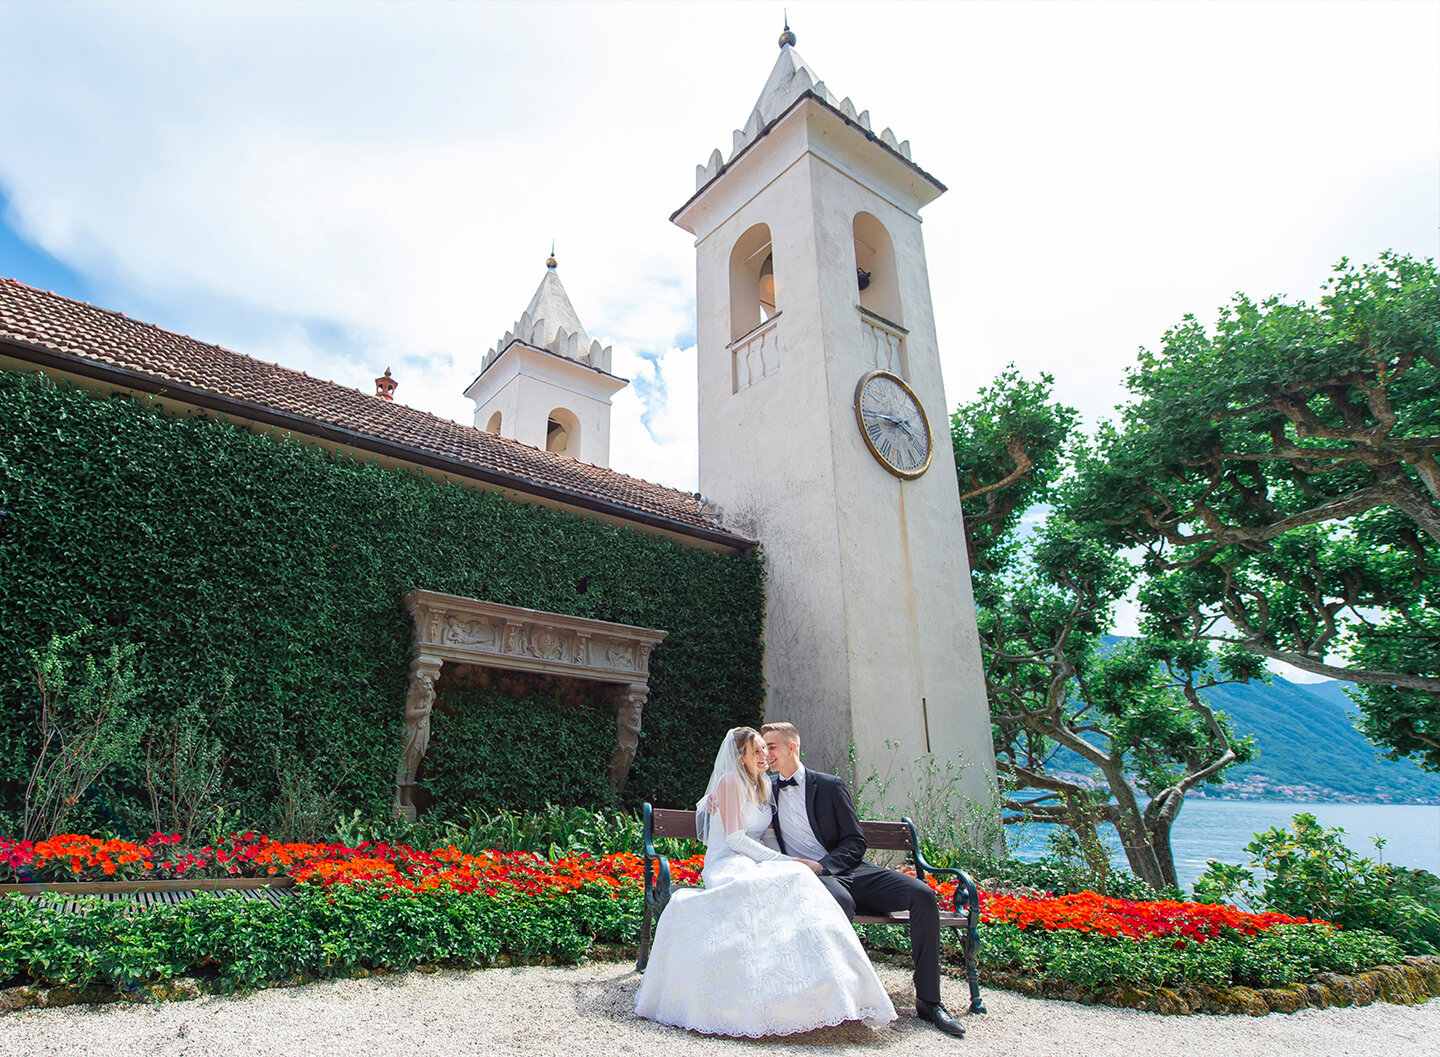 Villa del Balbianello wedding: bride and groom in the villa's garden